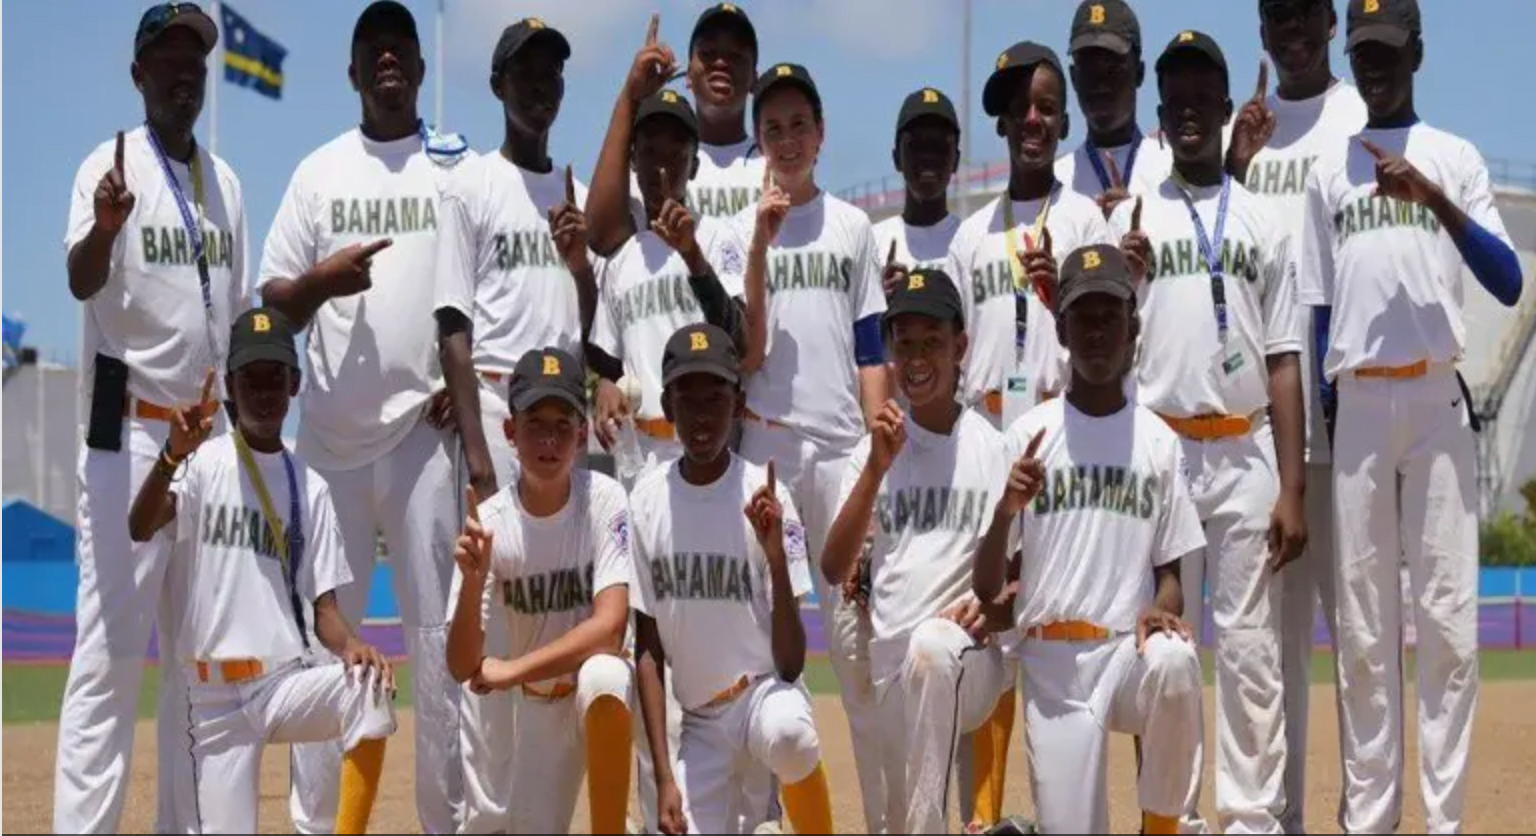 Burrows plans to bring Caribbean baseball tourney to The Bahamas Eye